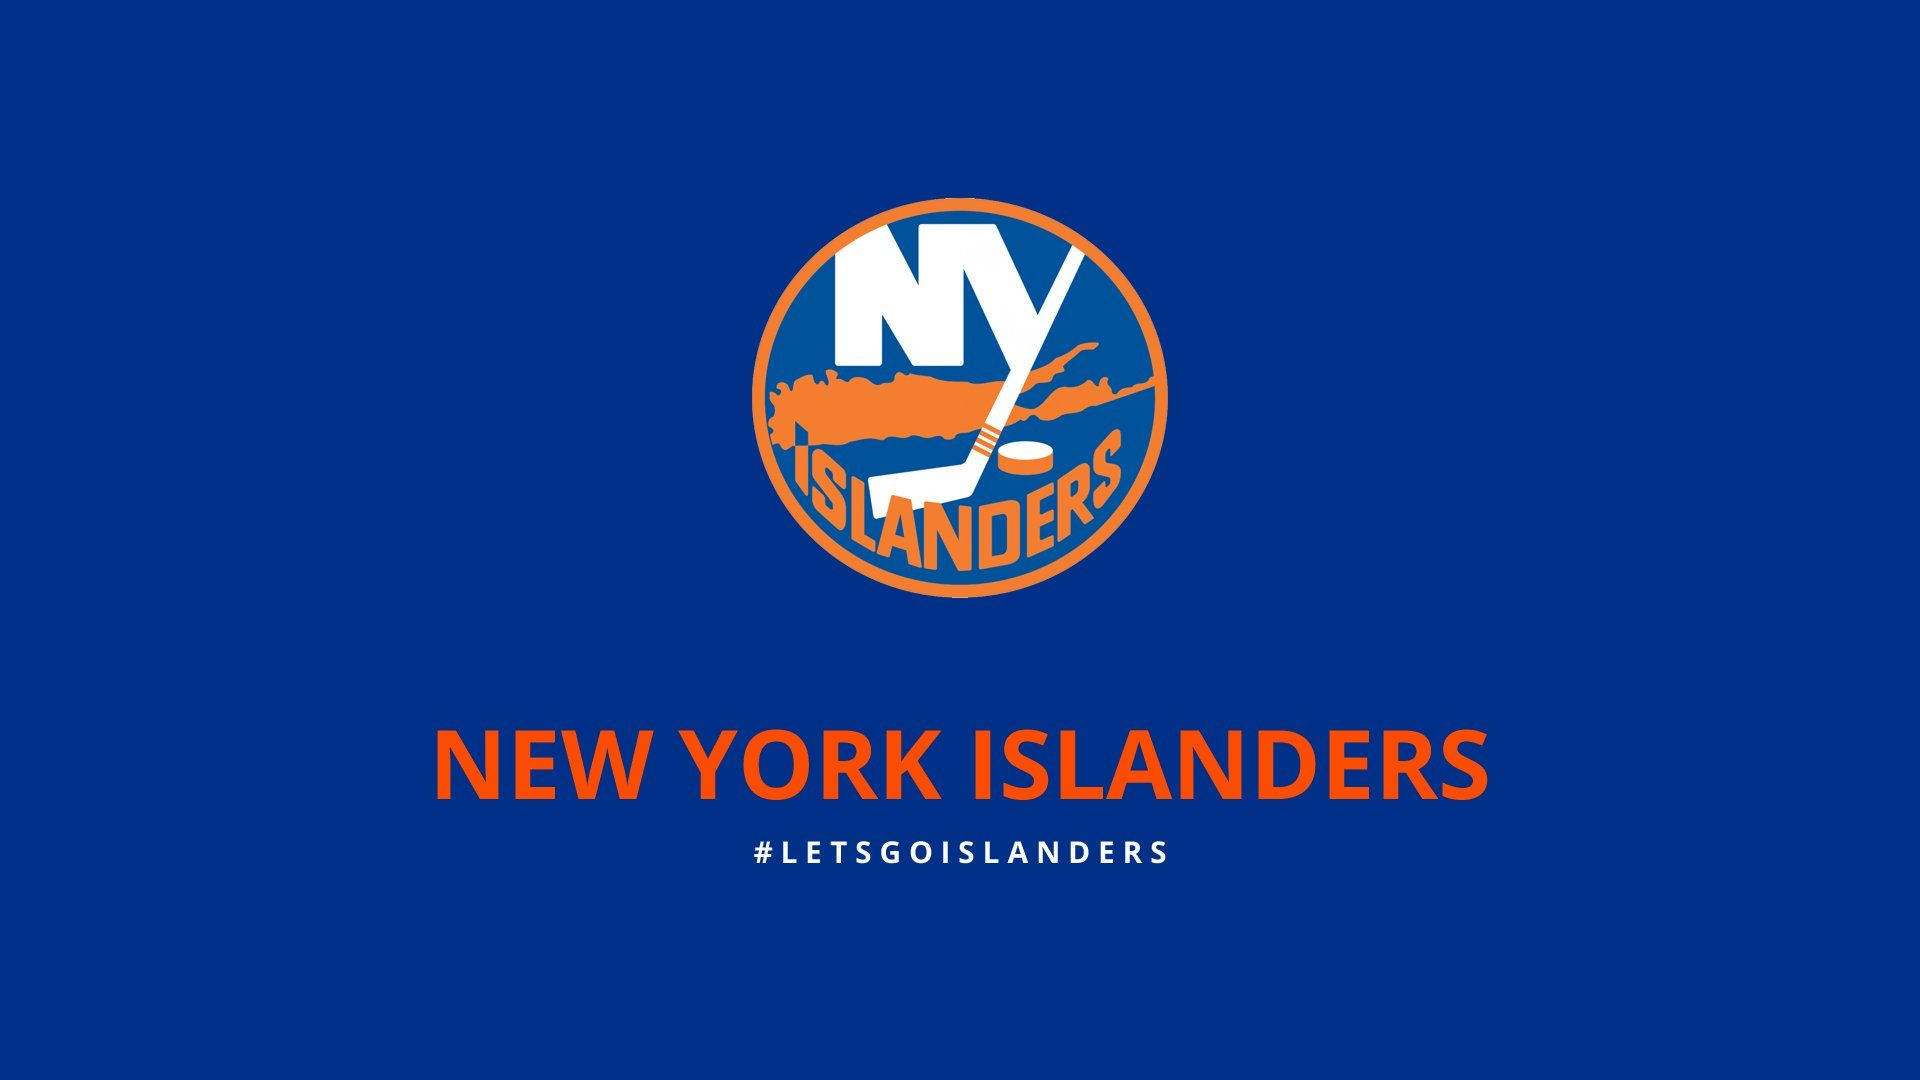 New York Islanders Background Photos